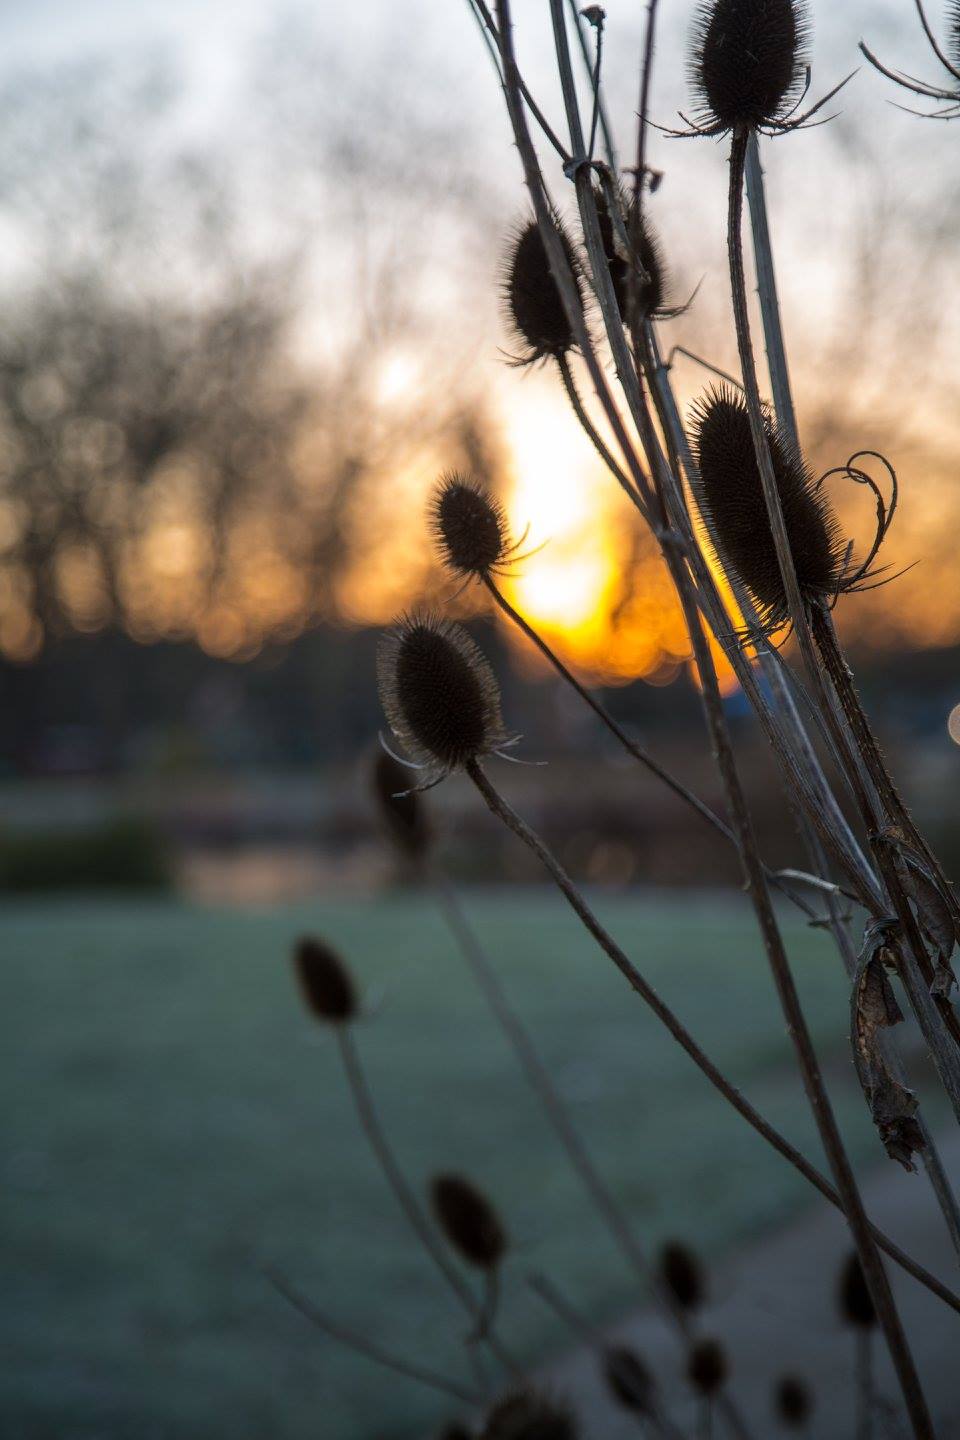 A London Winter Sunrise in Bishops Park by Stephanie Sadler, Little Observationist